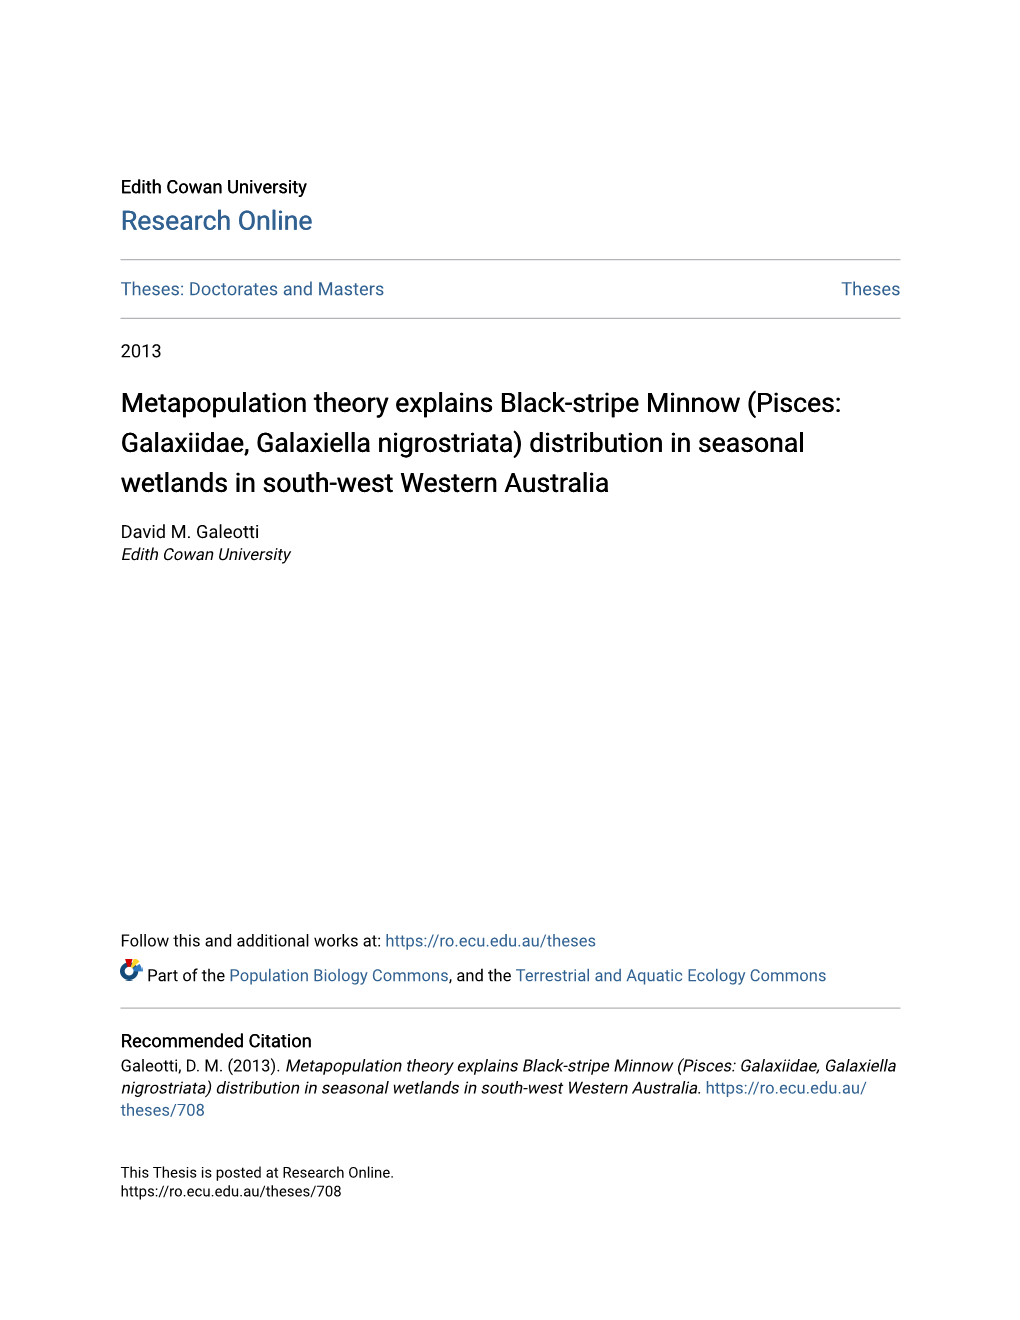 Metapopulation Theory Explains Black-Stripe Minnow (Pisces: Galaxiidae, Galaxiella Nigrostriata) Distribution in Seasonal Wetlands in South-West Western Australia